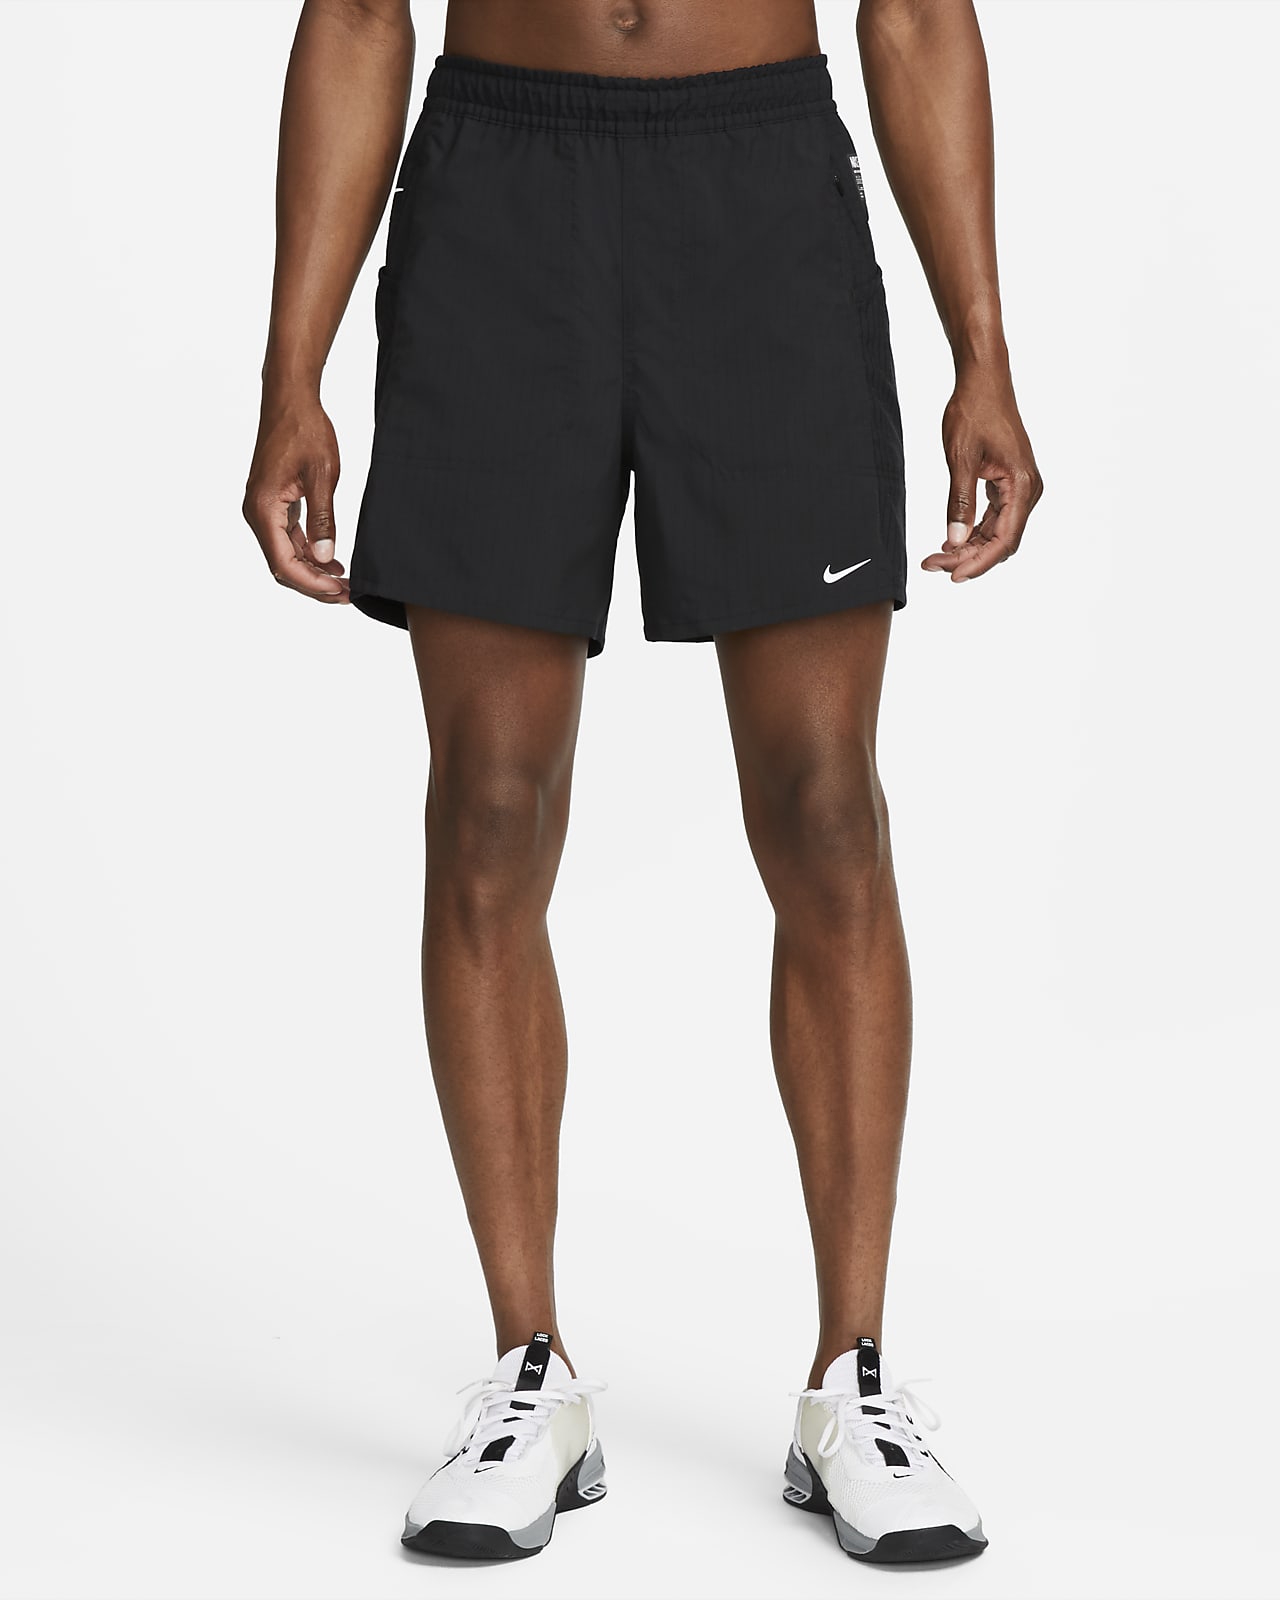 Nike Dri-FIT ADV Axis Men's Utility Fitness Trousers. Nike LU